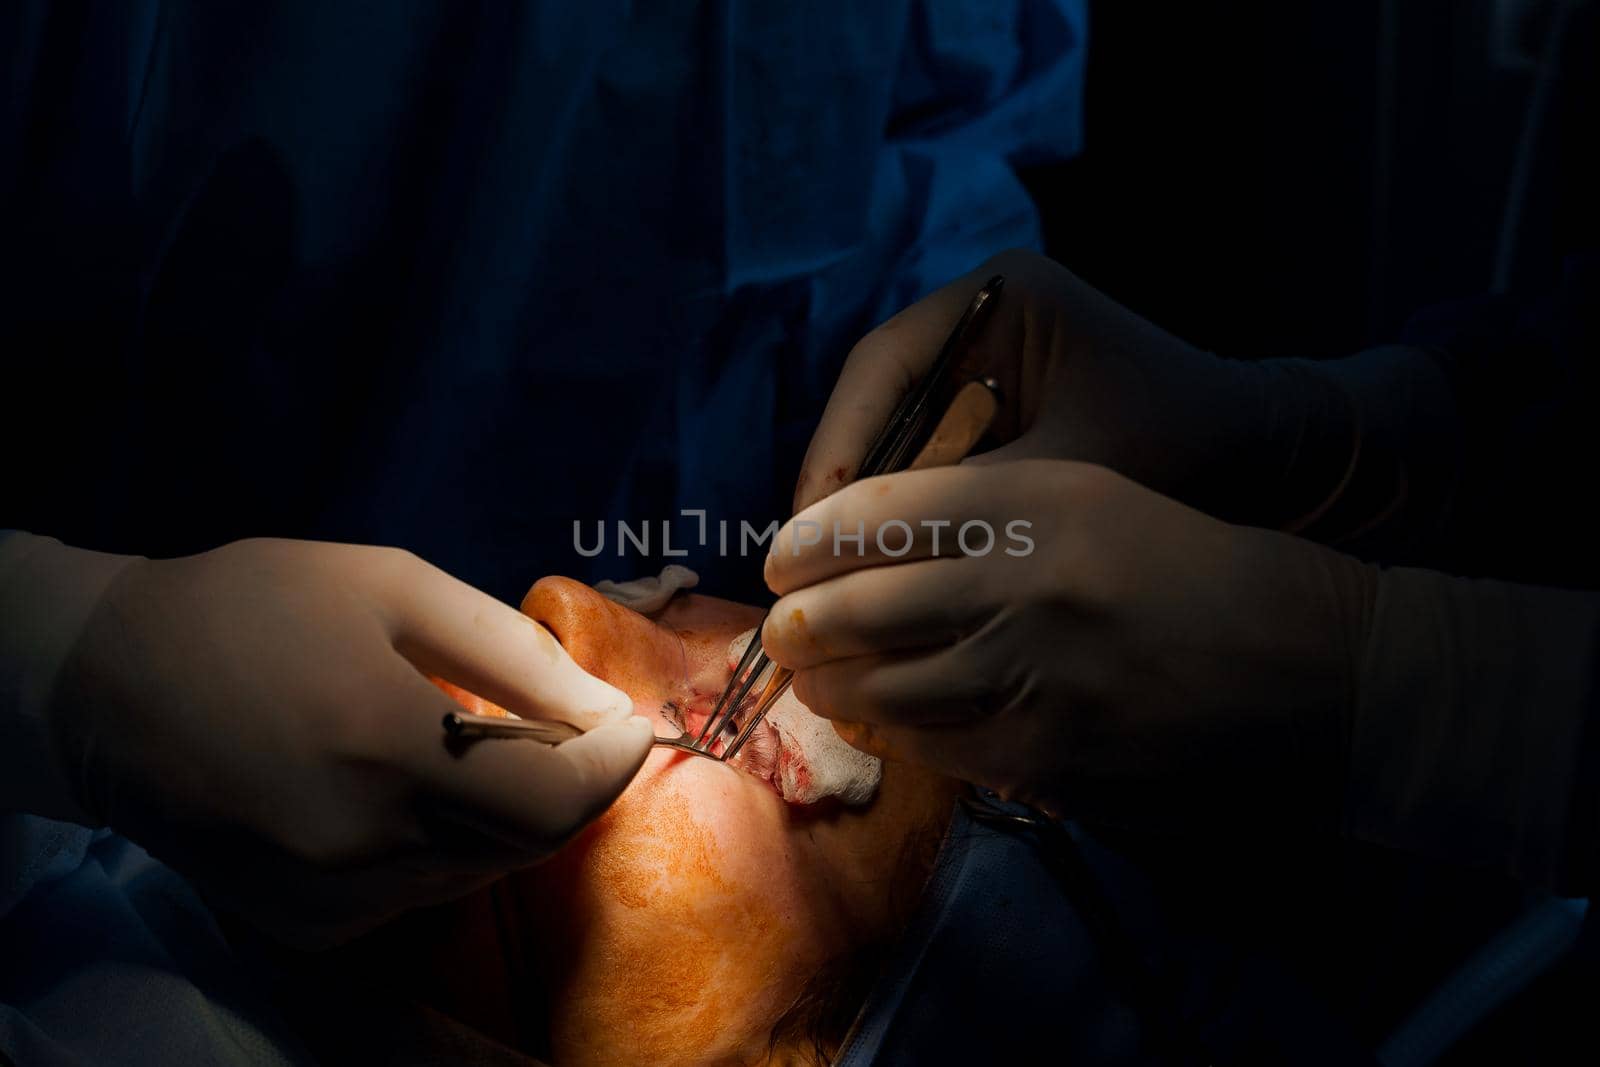 Upper blepharoplasty. Surgeon do plastic operation. 2 surgeons removing piece of skin from eyelid. Transconjunctival blepharoplasty. Surgery.